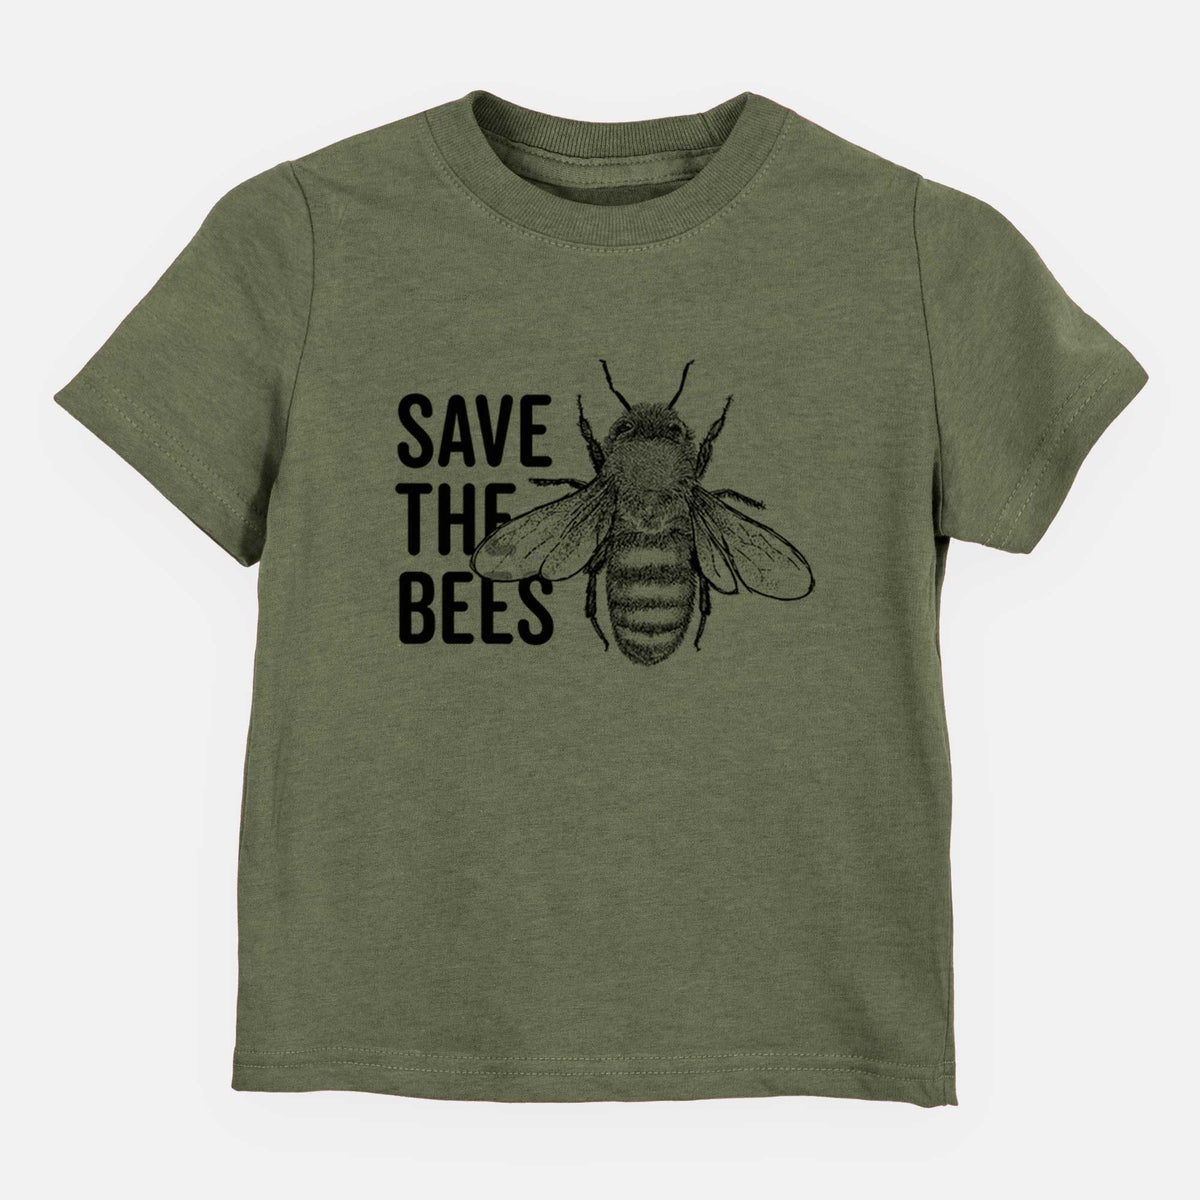 Save the Bees - Kids Shirt